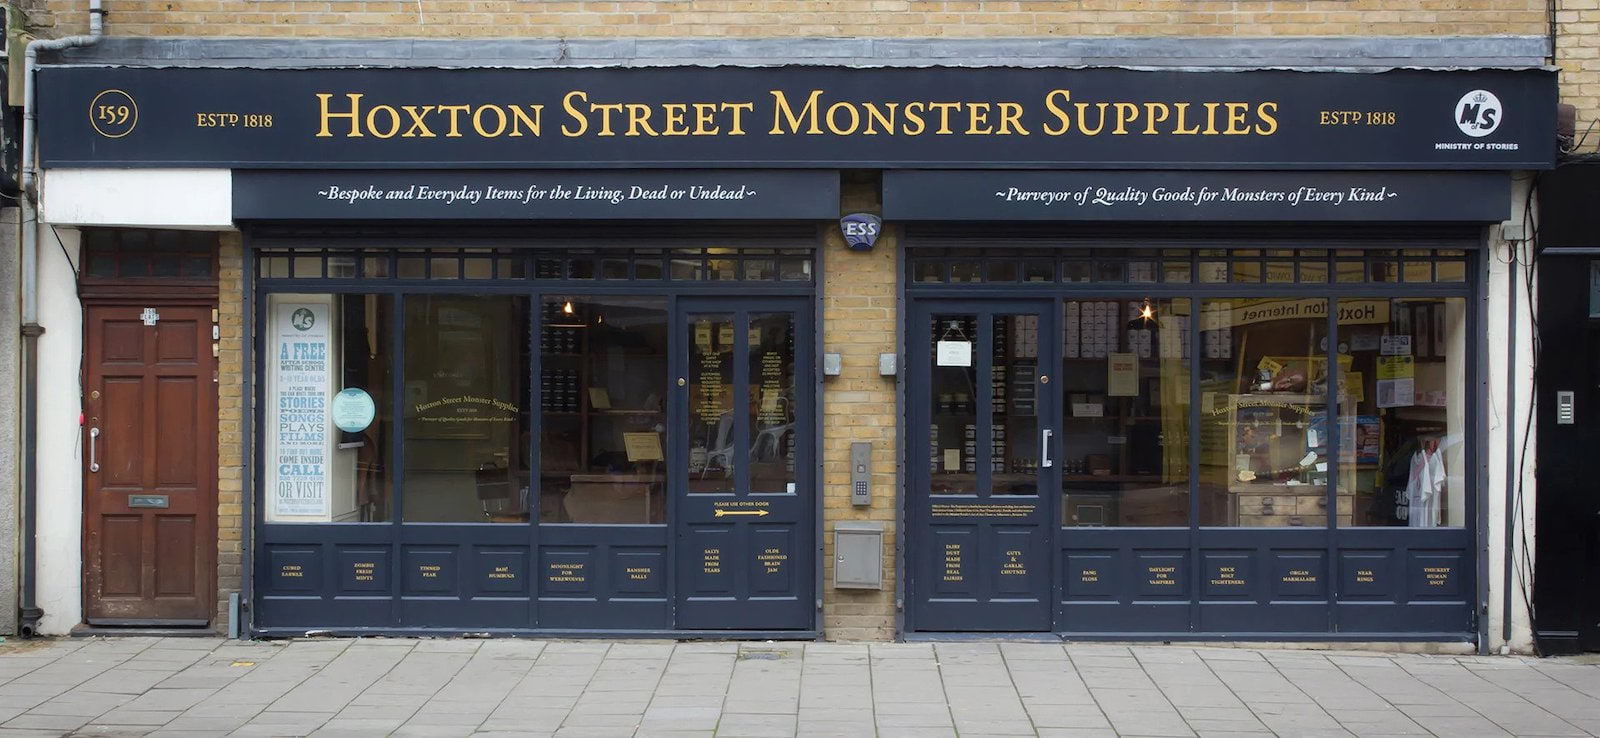 Hoxton Street Monster Supplies – Weekend with kids